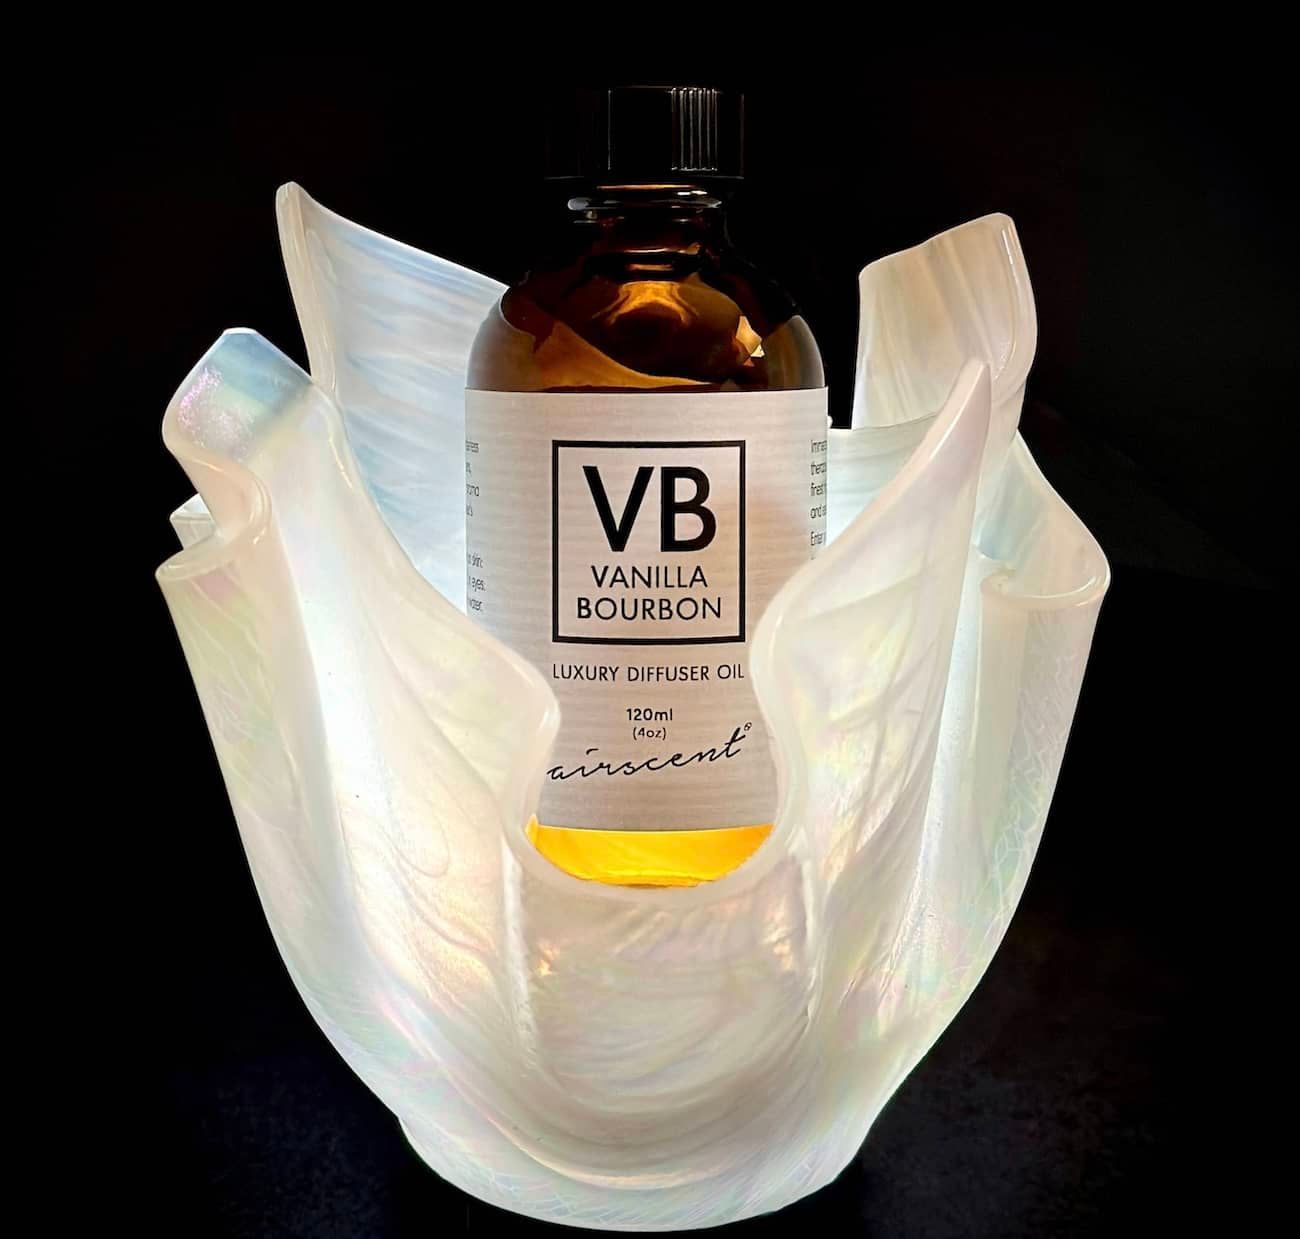 Vanilla fragrance oil with bourbon scent